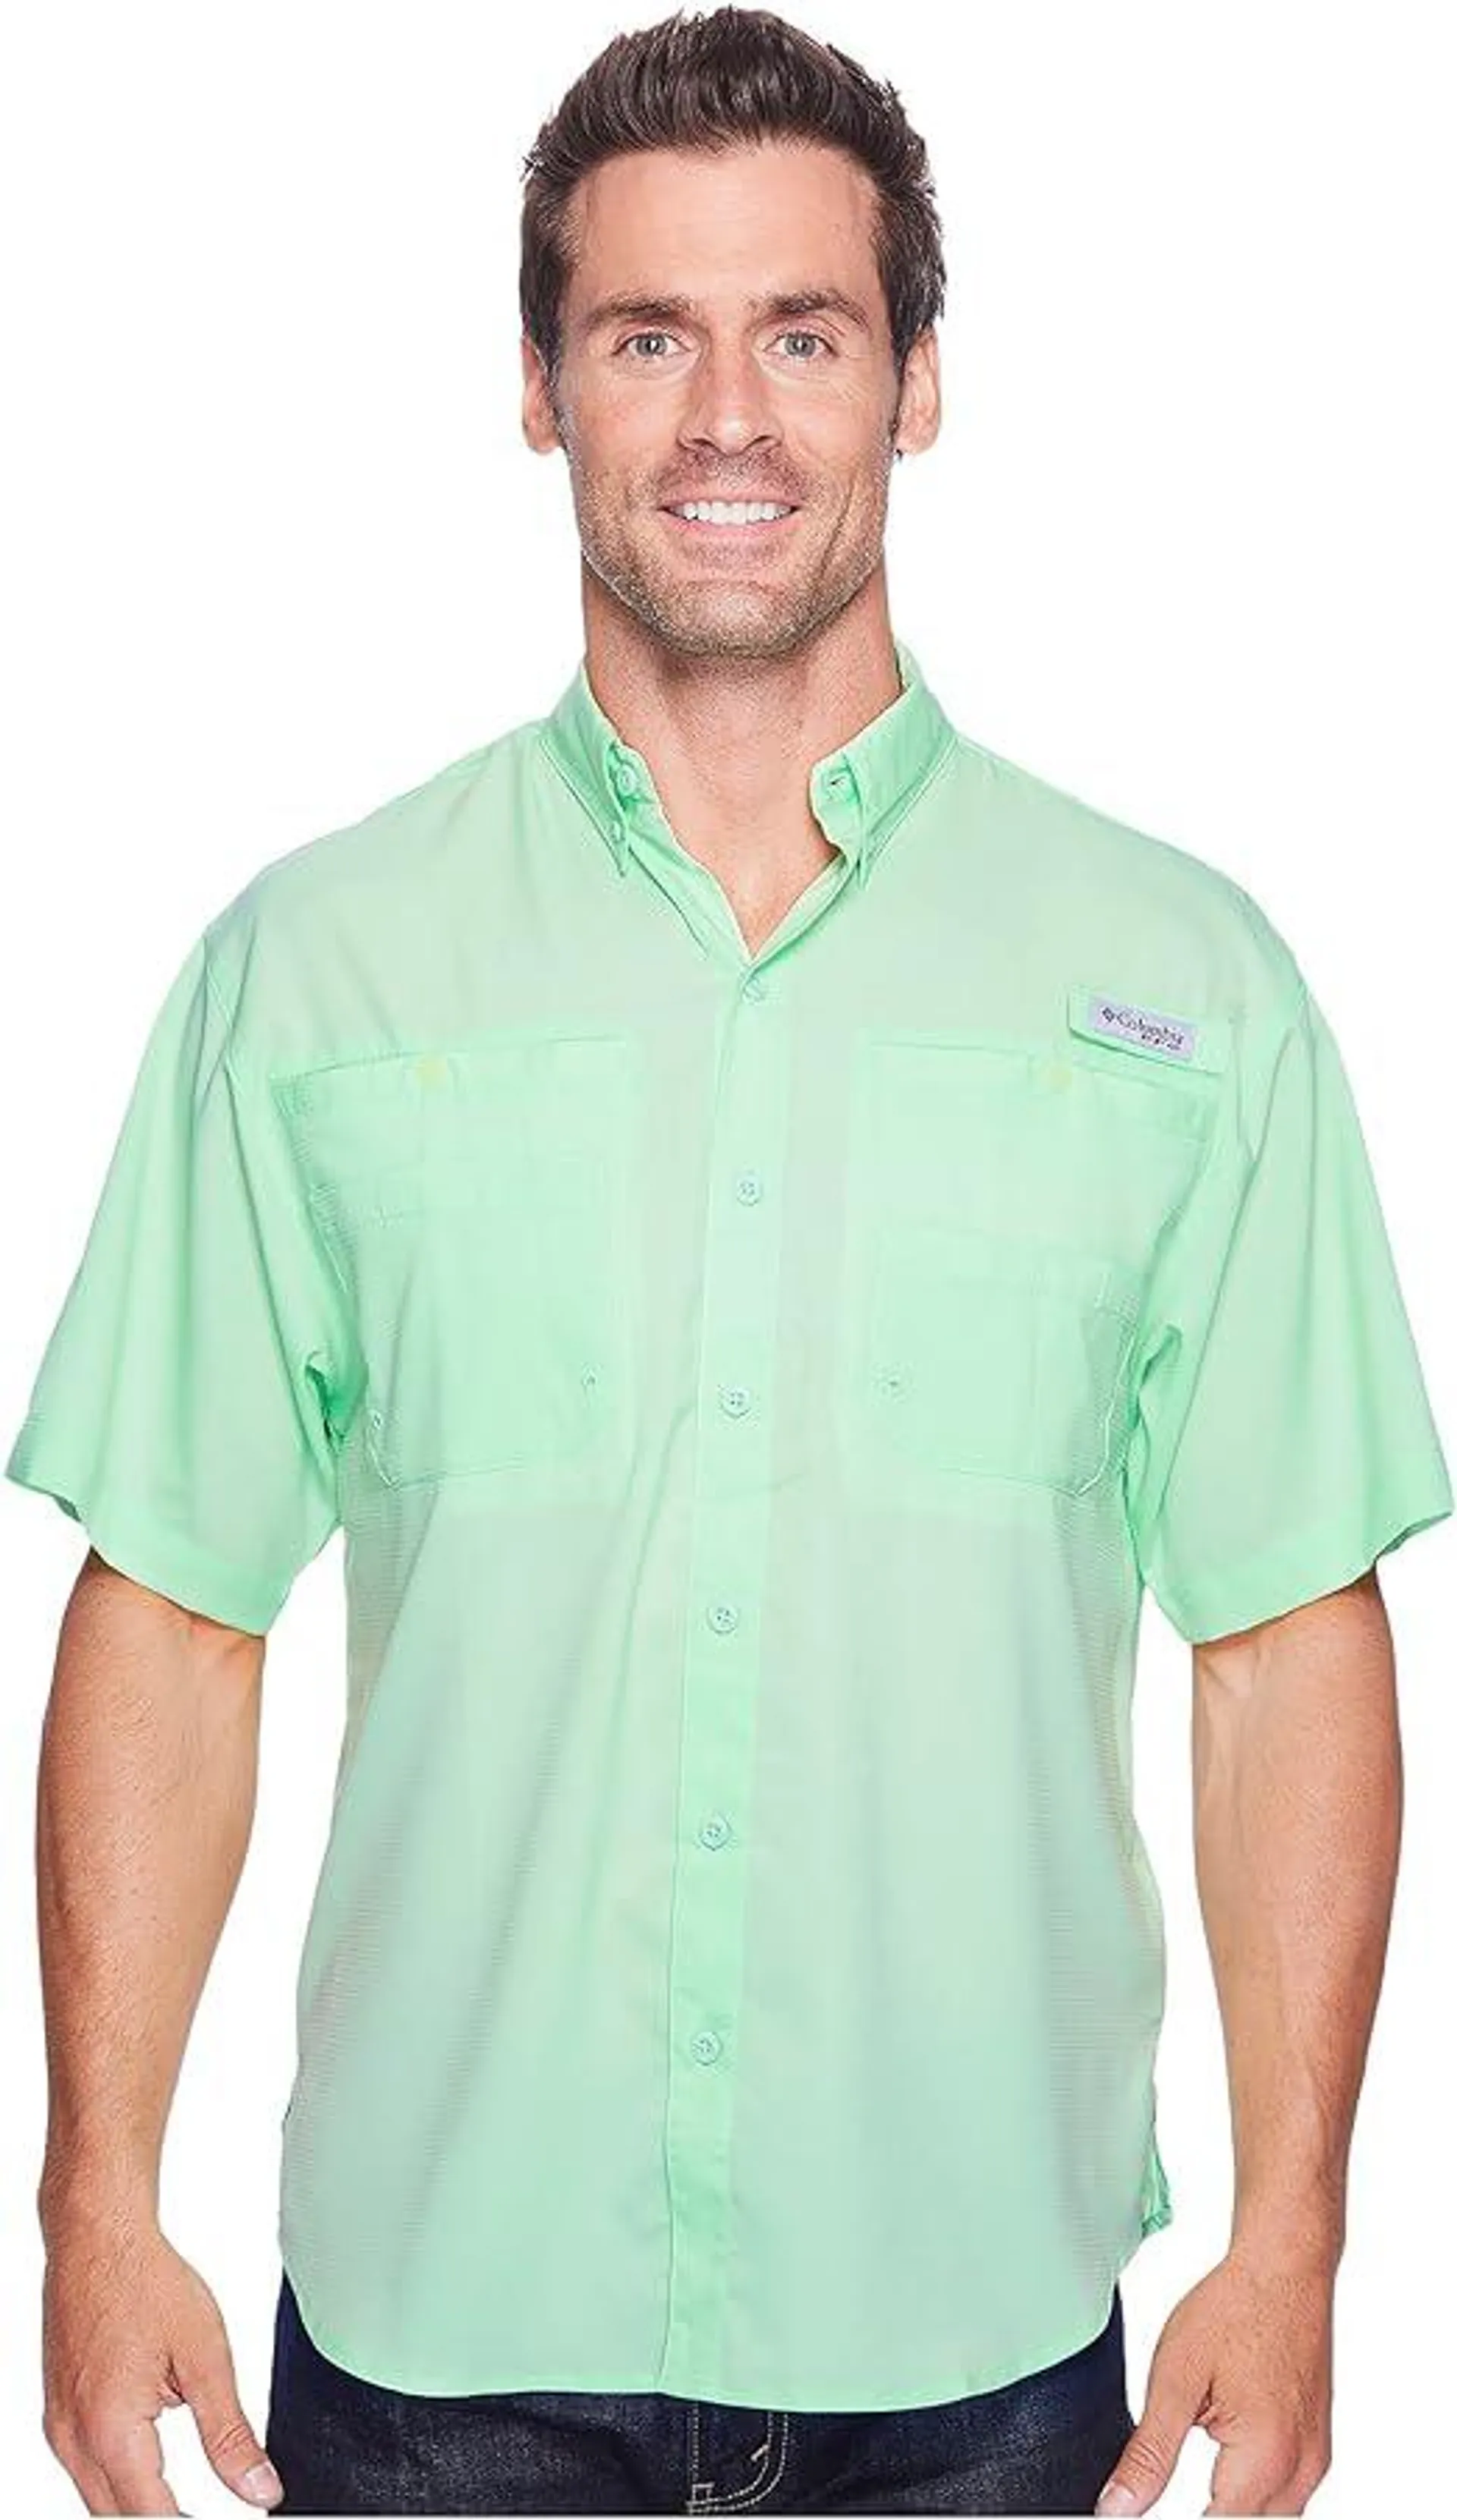 Columbia Men's Standard Tamiami II SS Shirt, Key West, X-Small